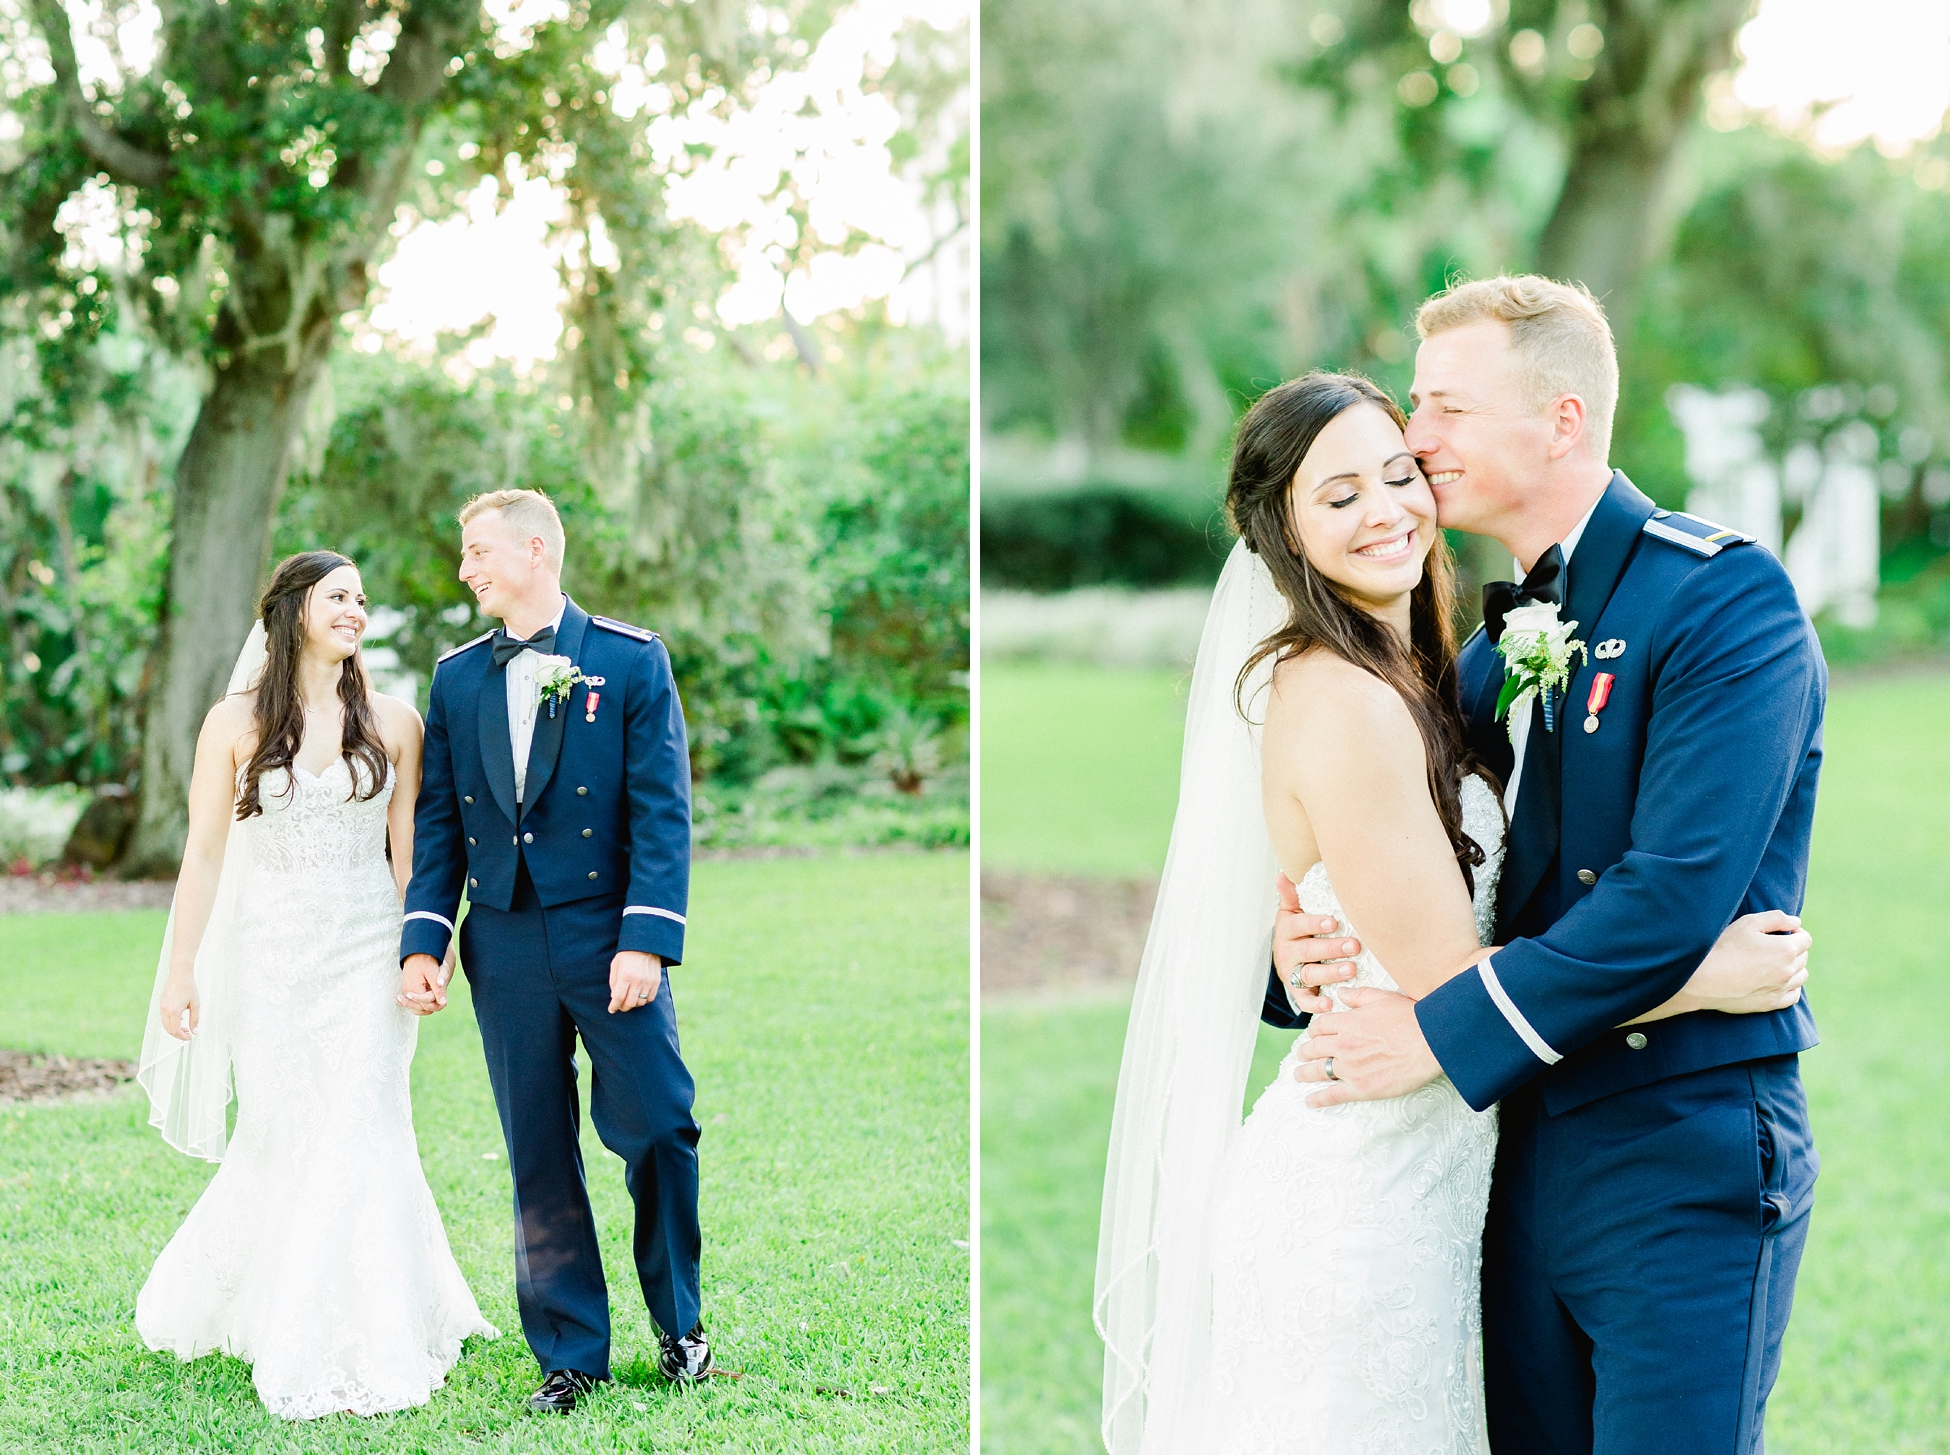 Tampa Garden Club Wedding | © Ailyn La Torre Photography 2018